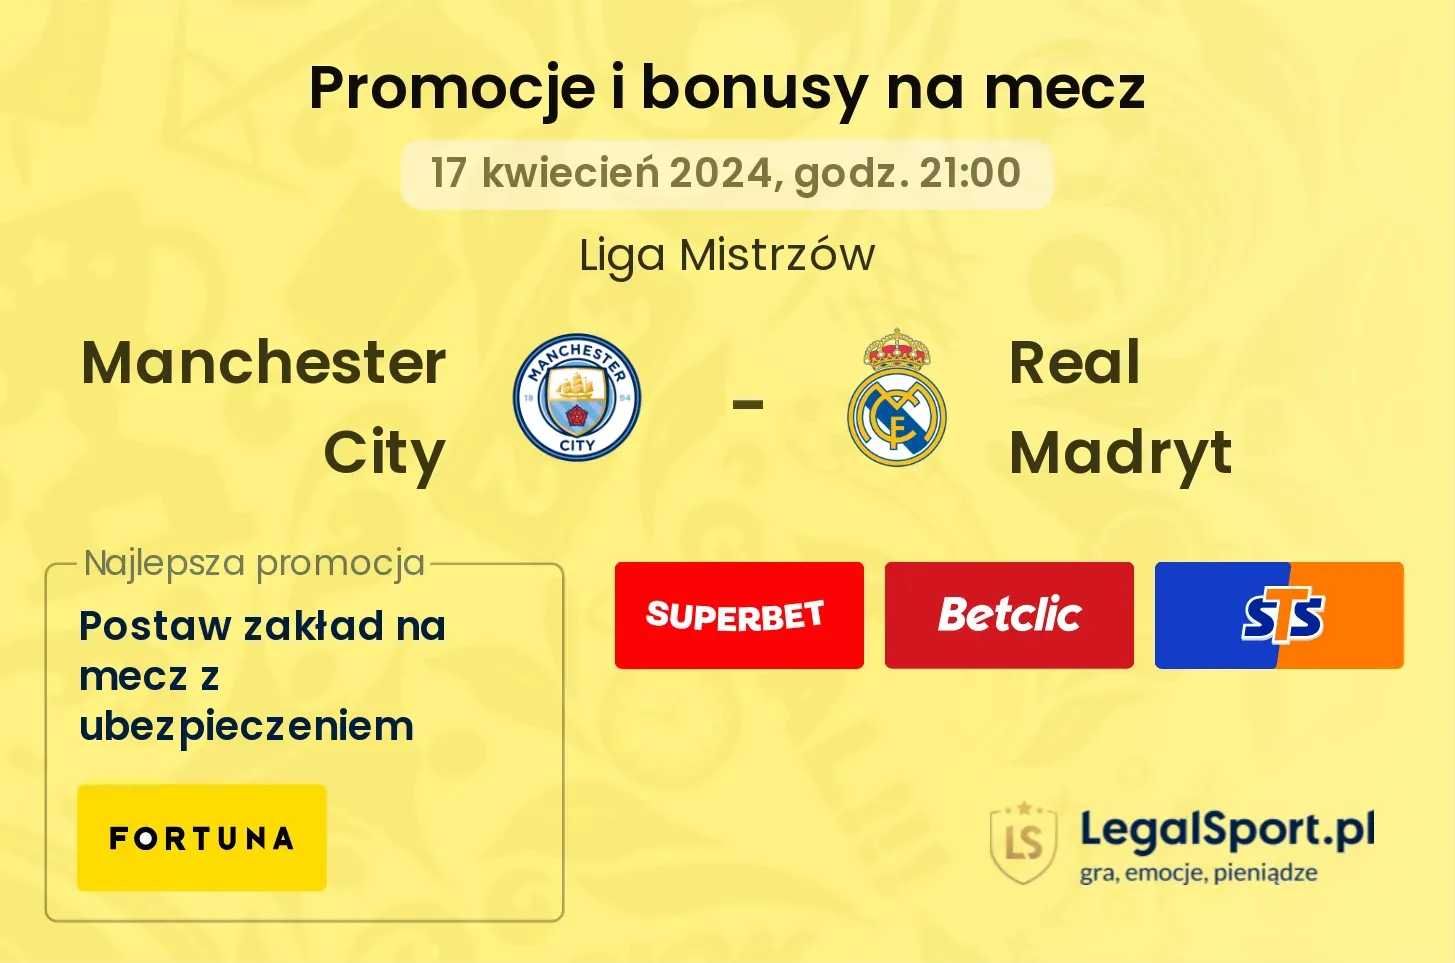 Manchester City - Real Madryt promocje i bonusy (17.04, 21:00)